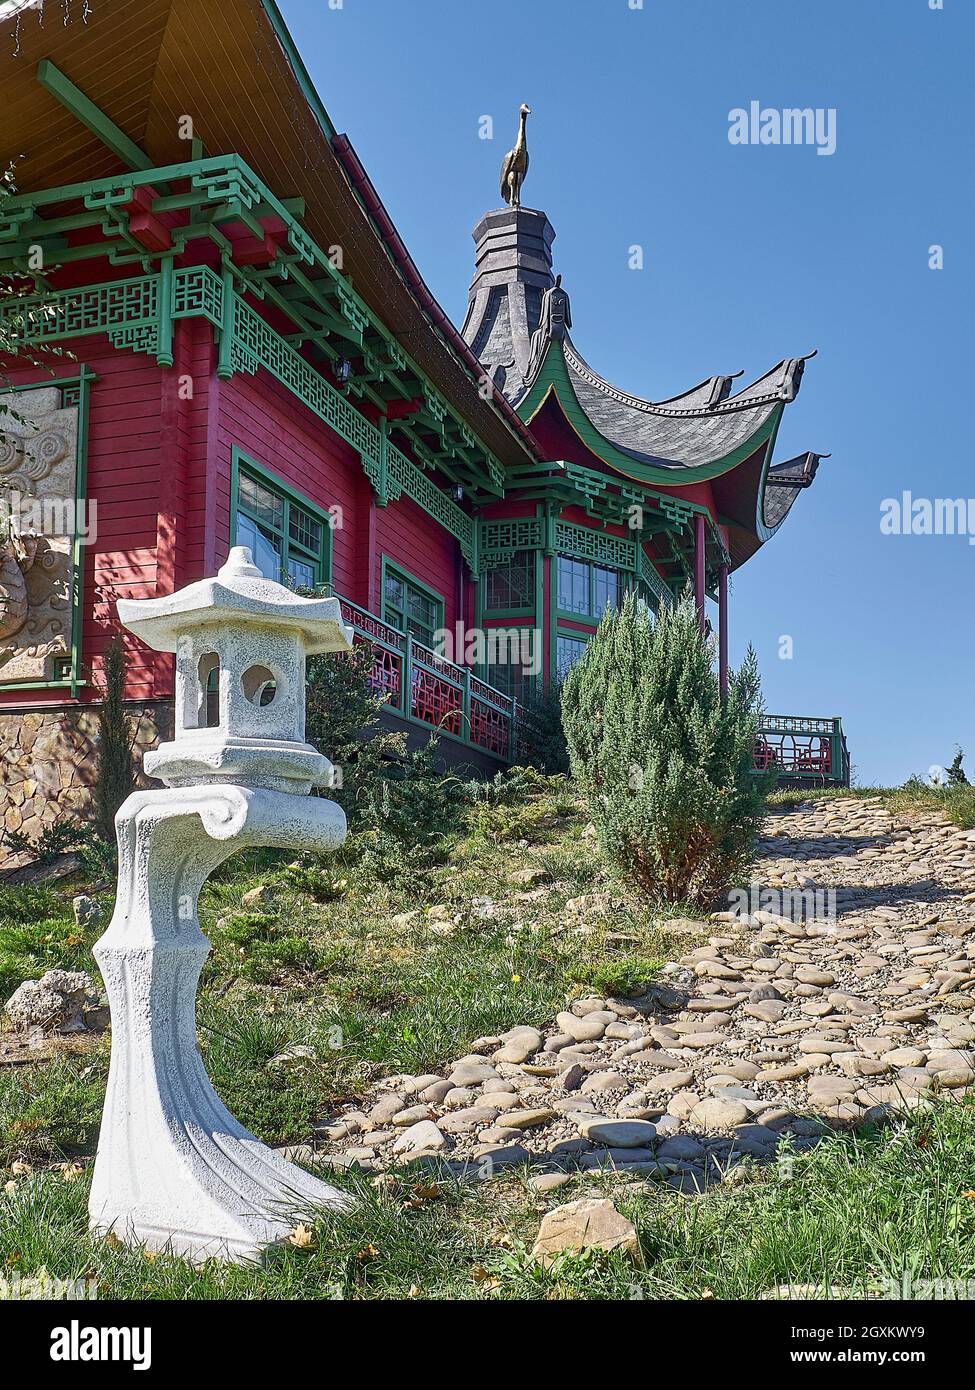 Pagoda-style modern house and garden Stock Photo